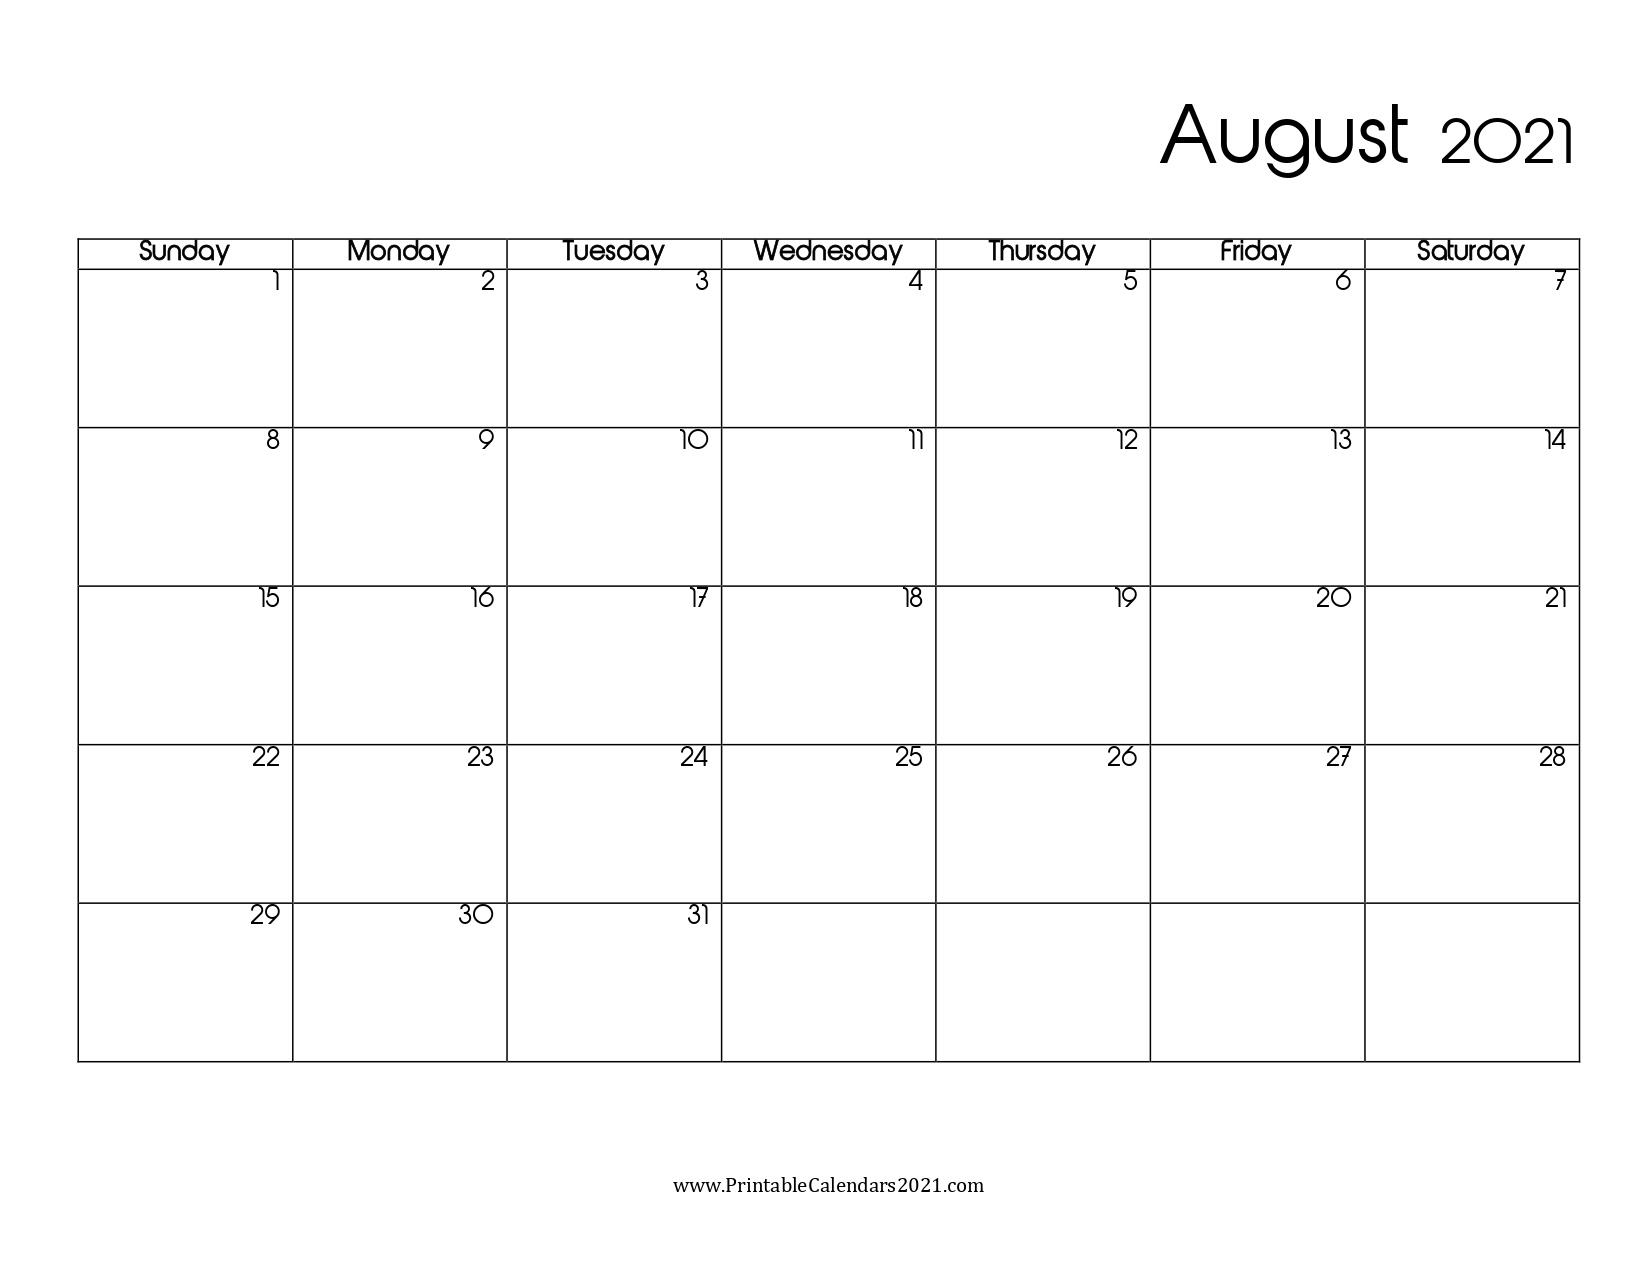 44+ August 2021 Calendar Printable, August 2021 Blank Calendar Pdf August 2021 Calendar Reading